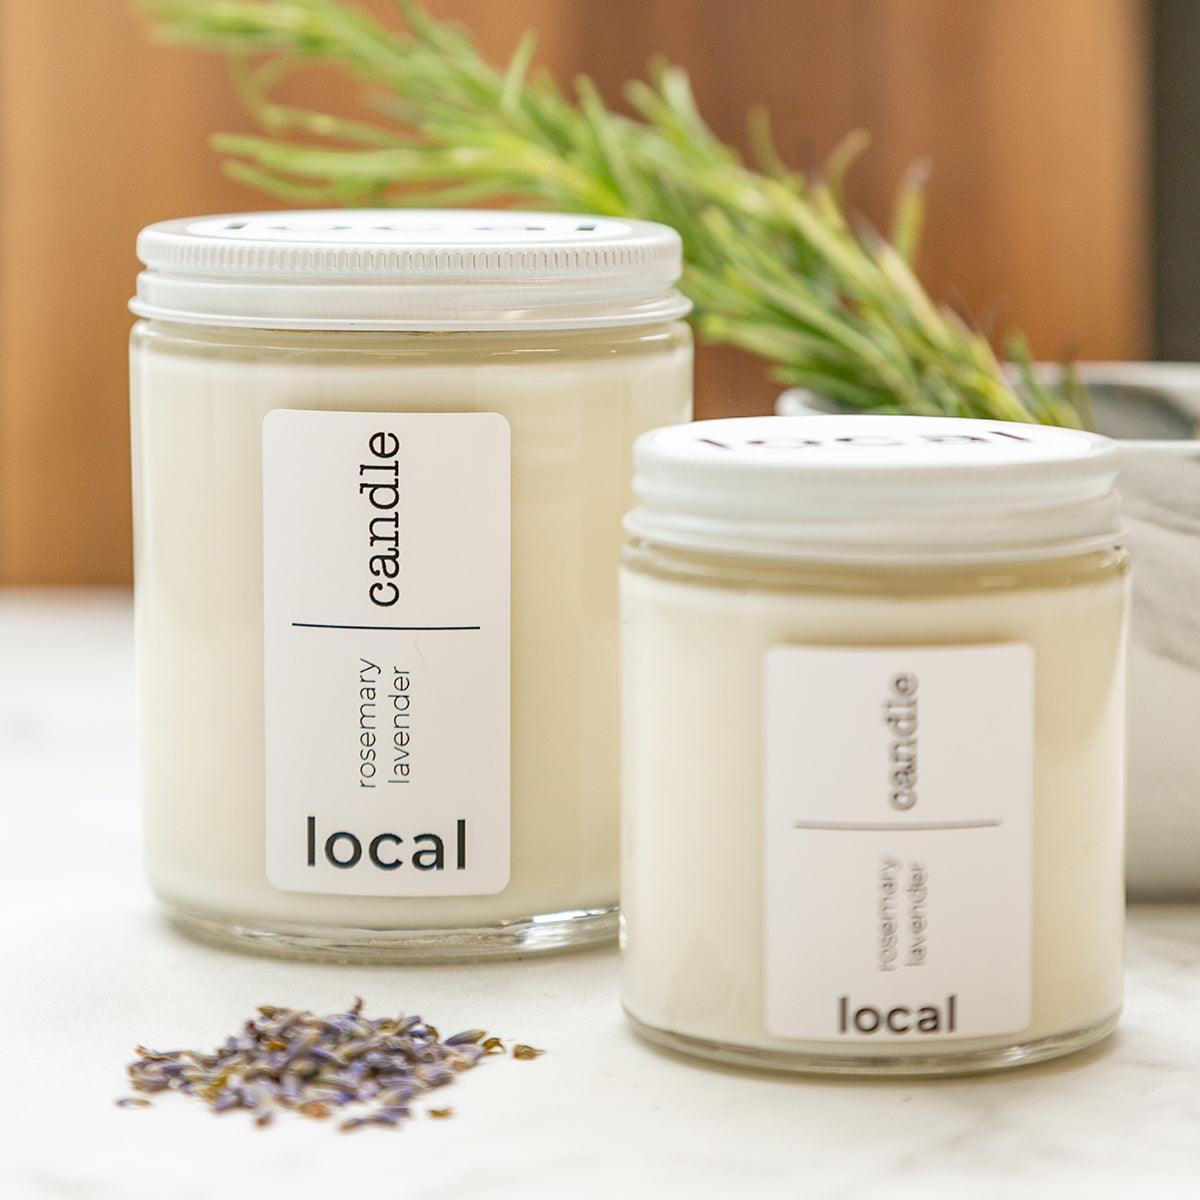 local candle - eucalyptus lavender - local - letsbelocal.ca